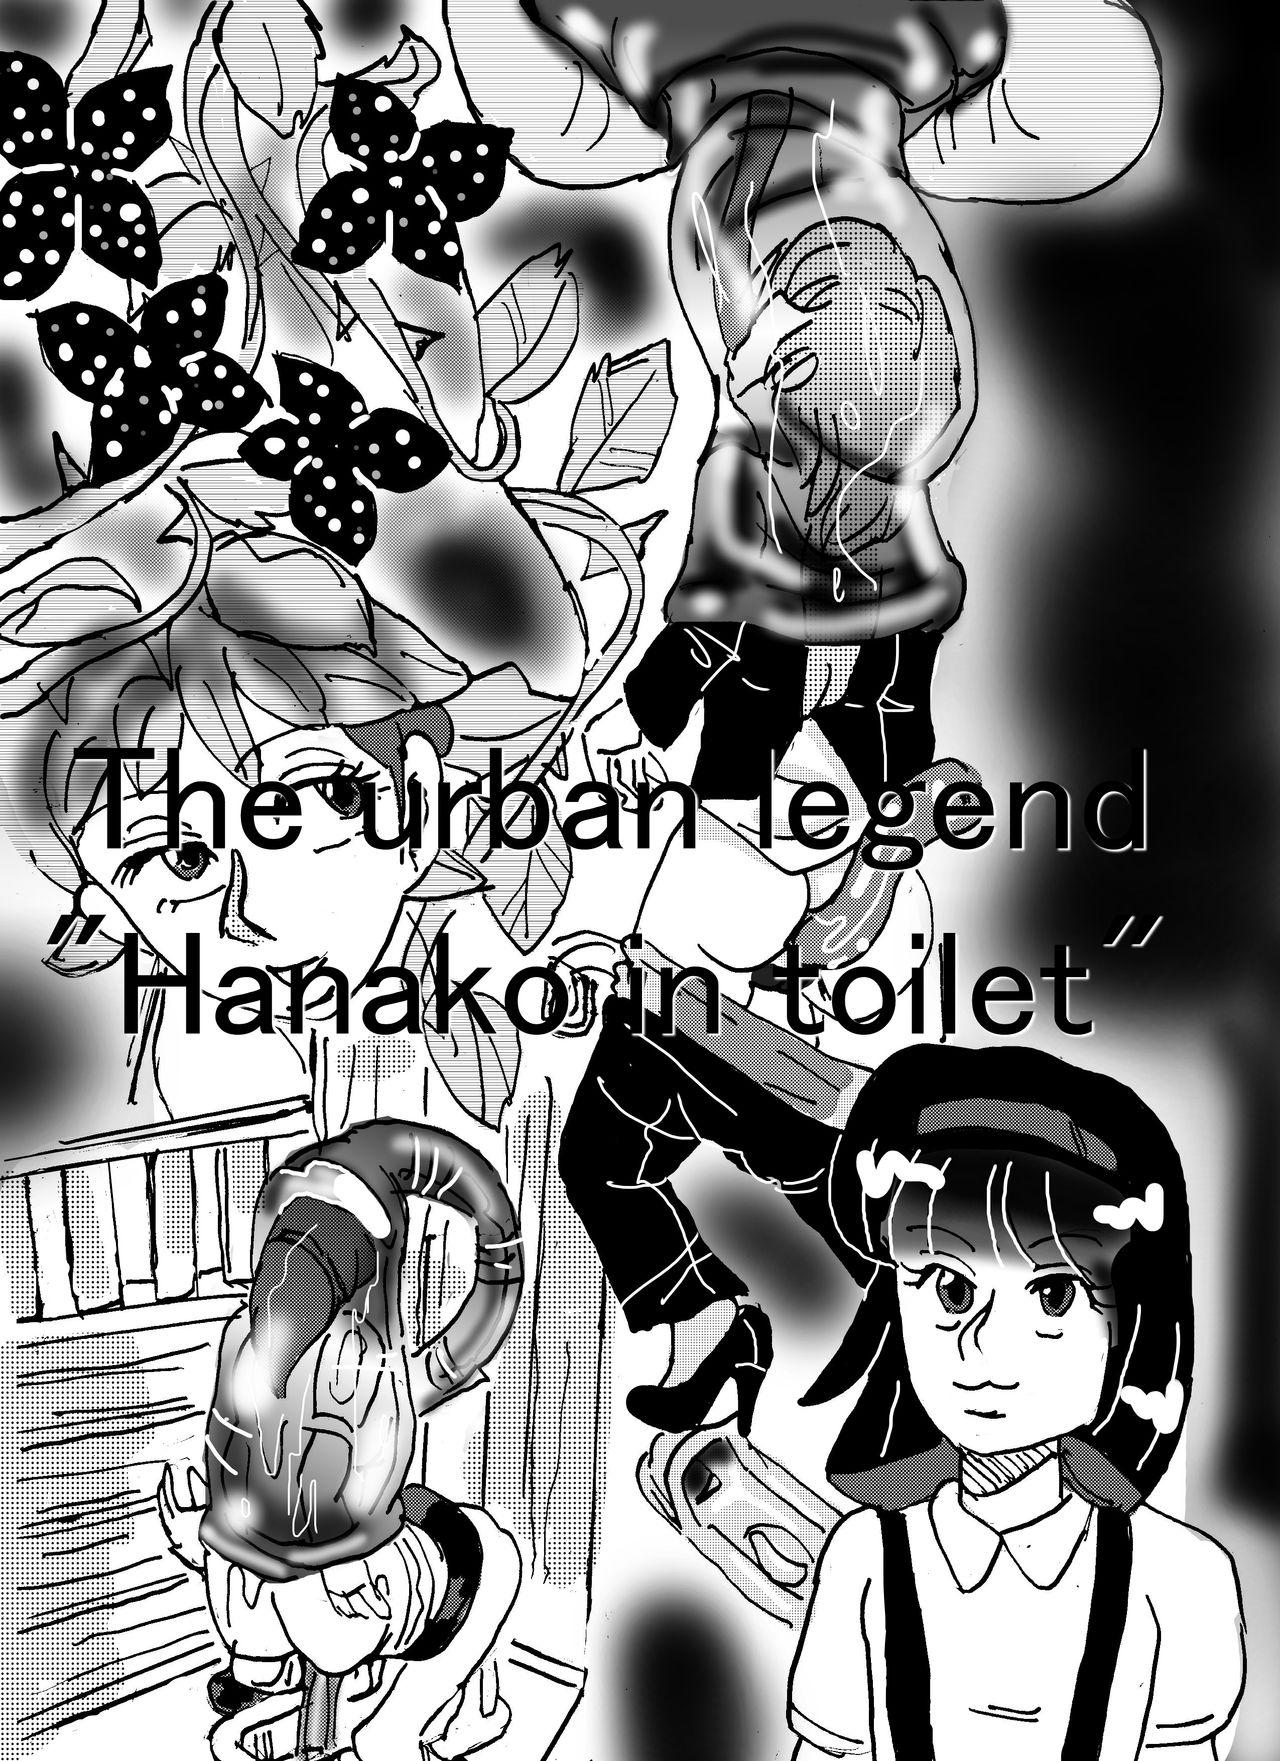 Throat Urban legend "Ha*ako in toilet" - Original Bbw - Picture 1